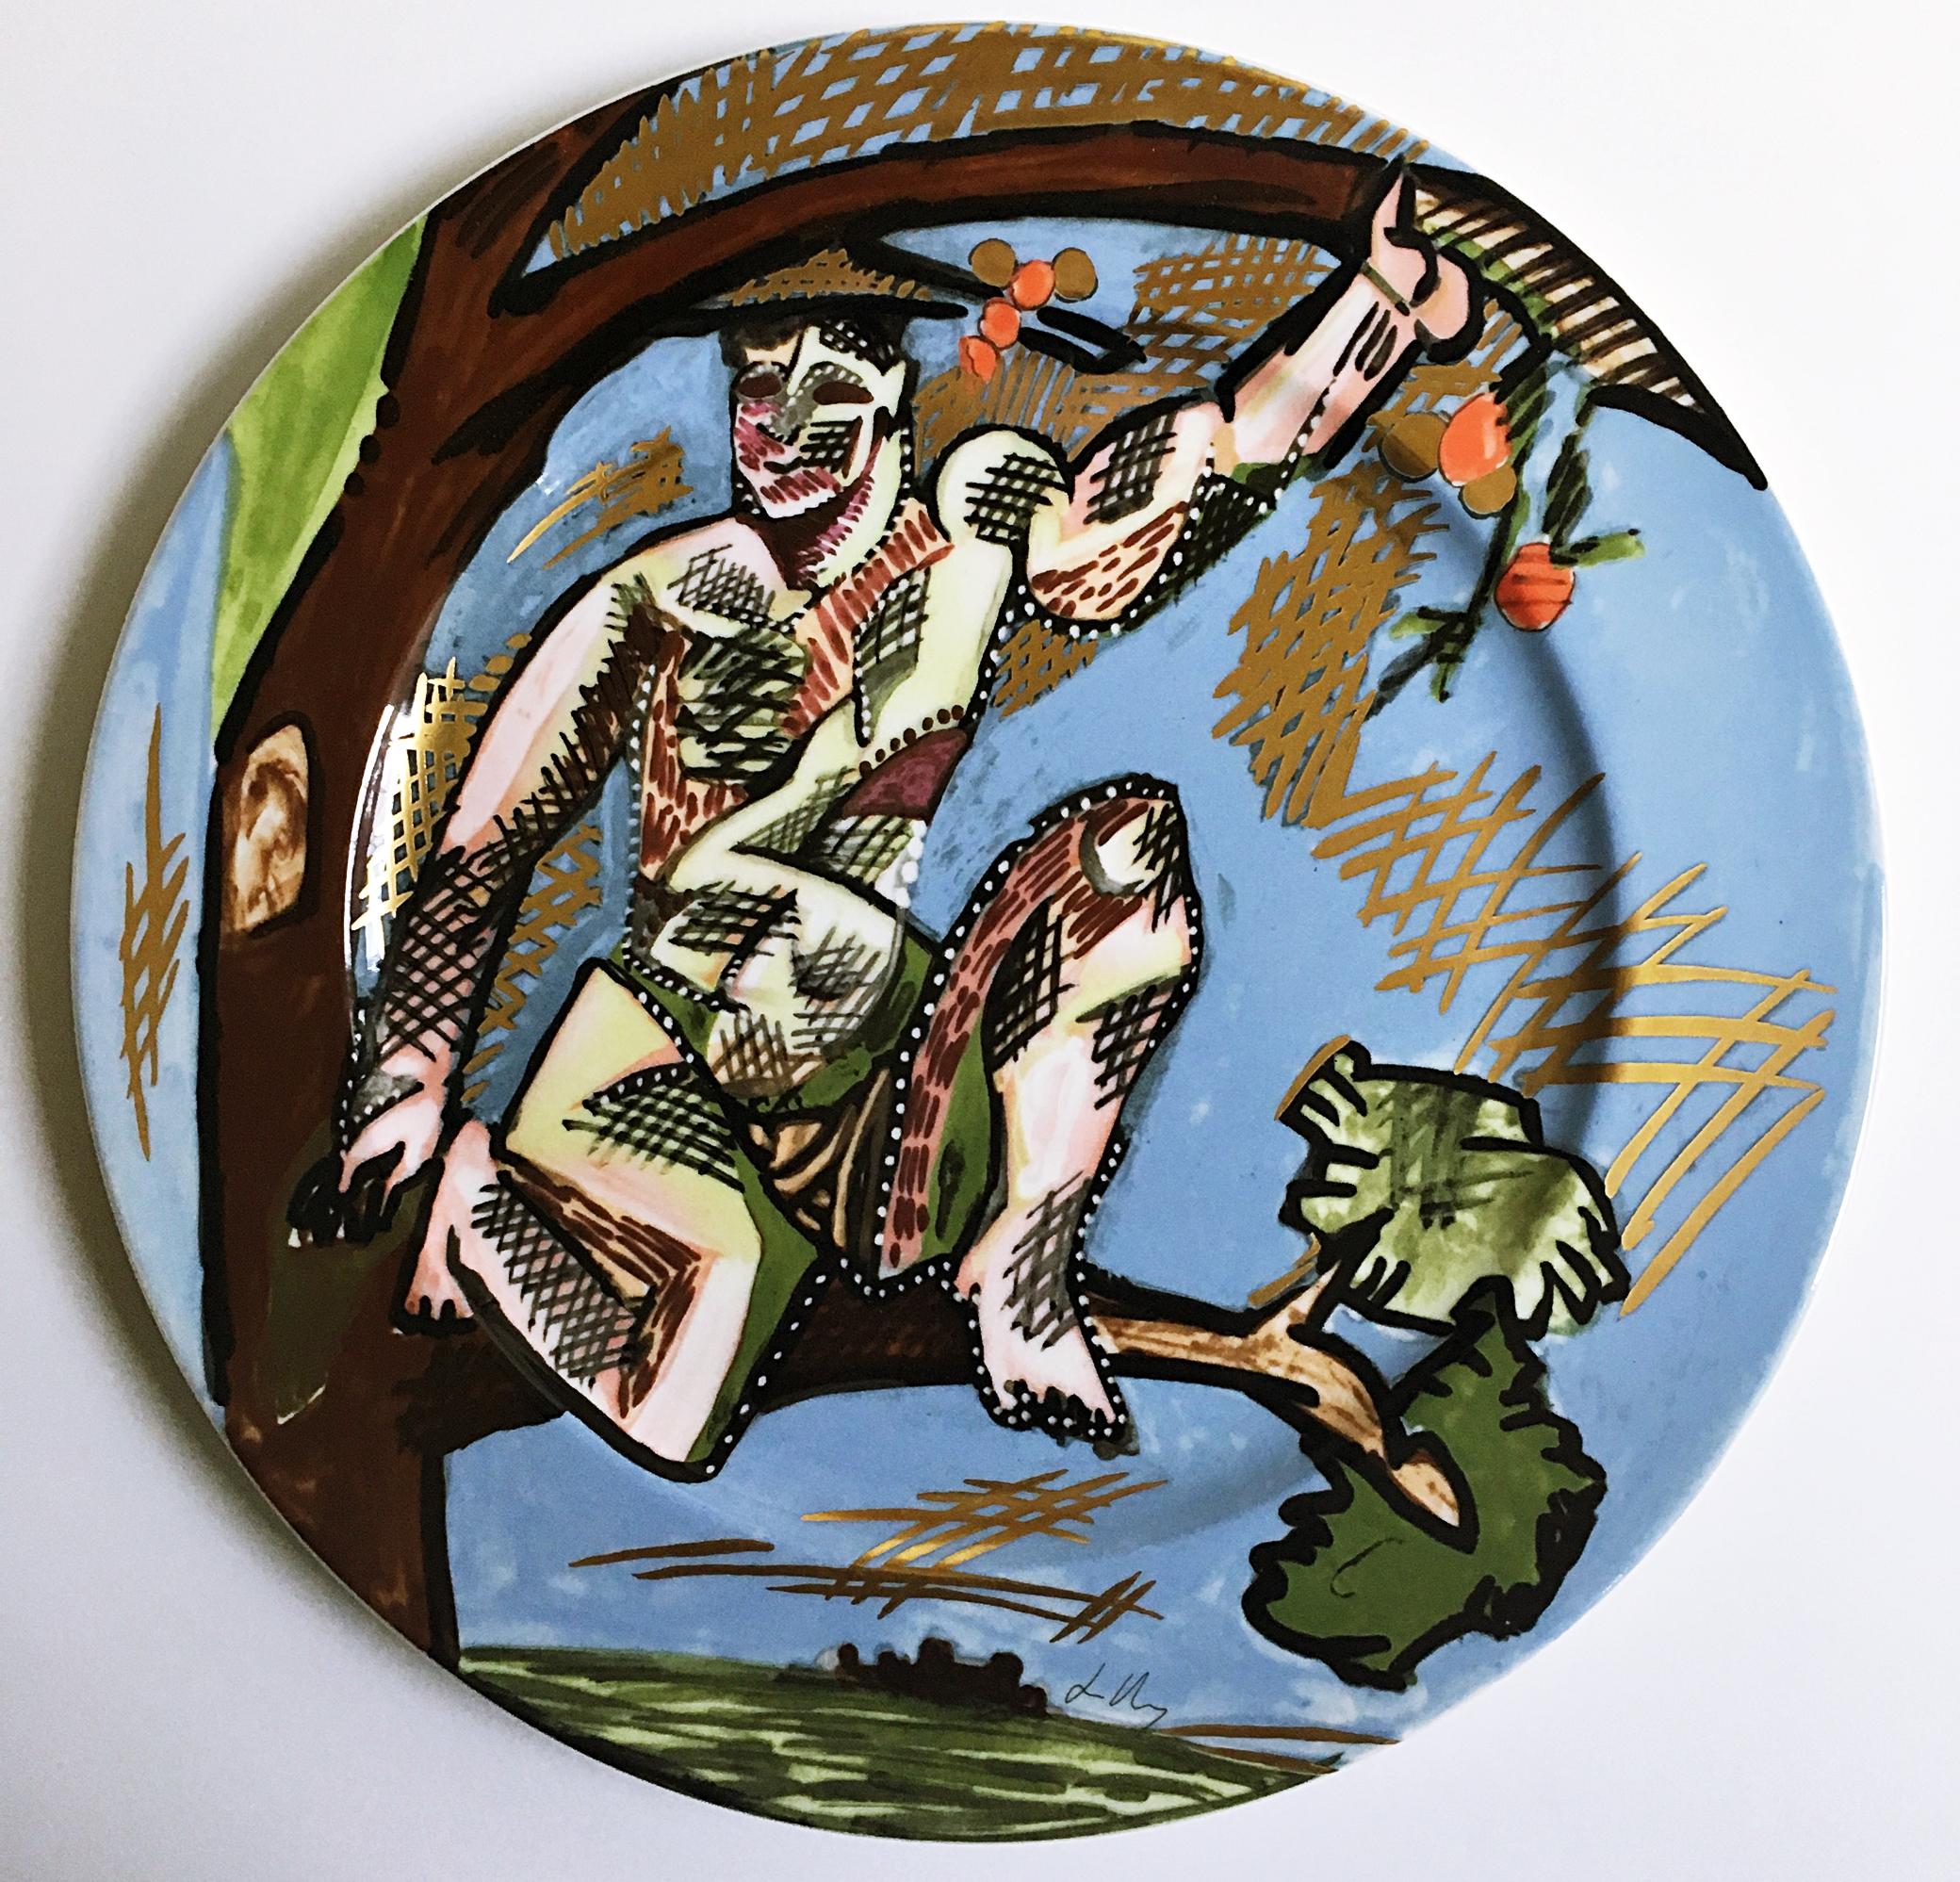 Kunstlerplatzteller Artists ceramic plate by Rosenthal, Inc